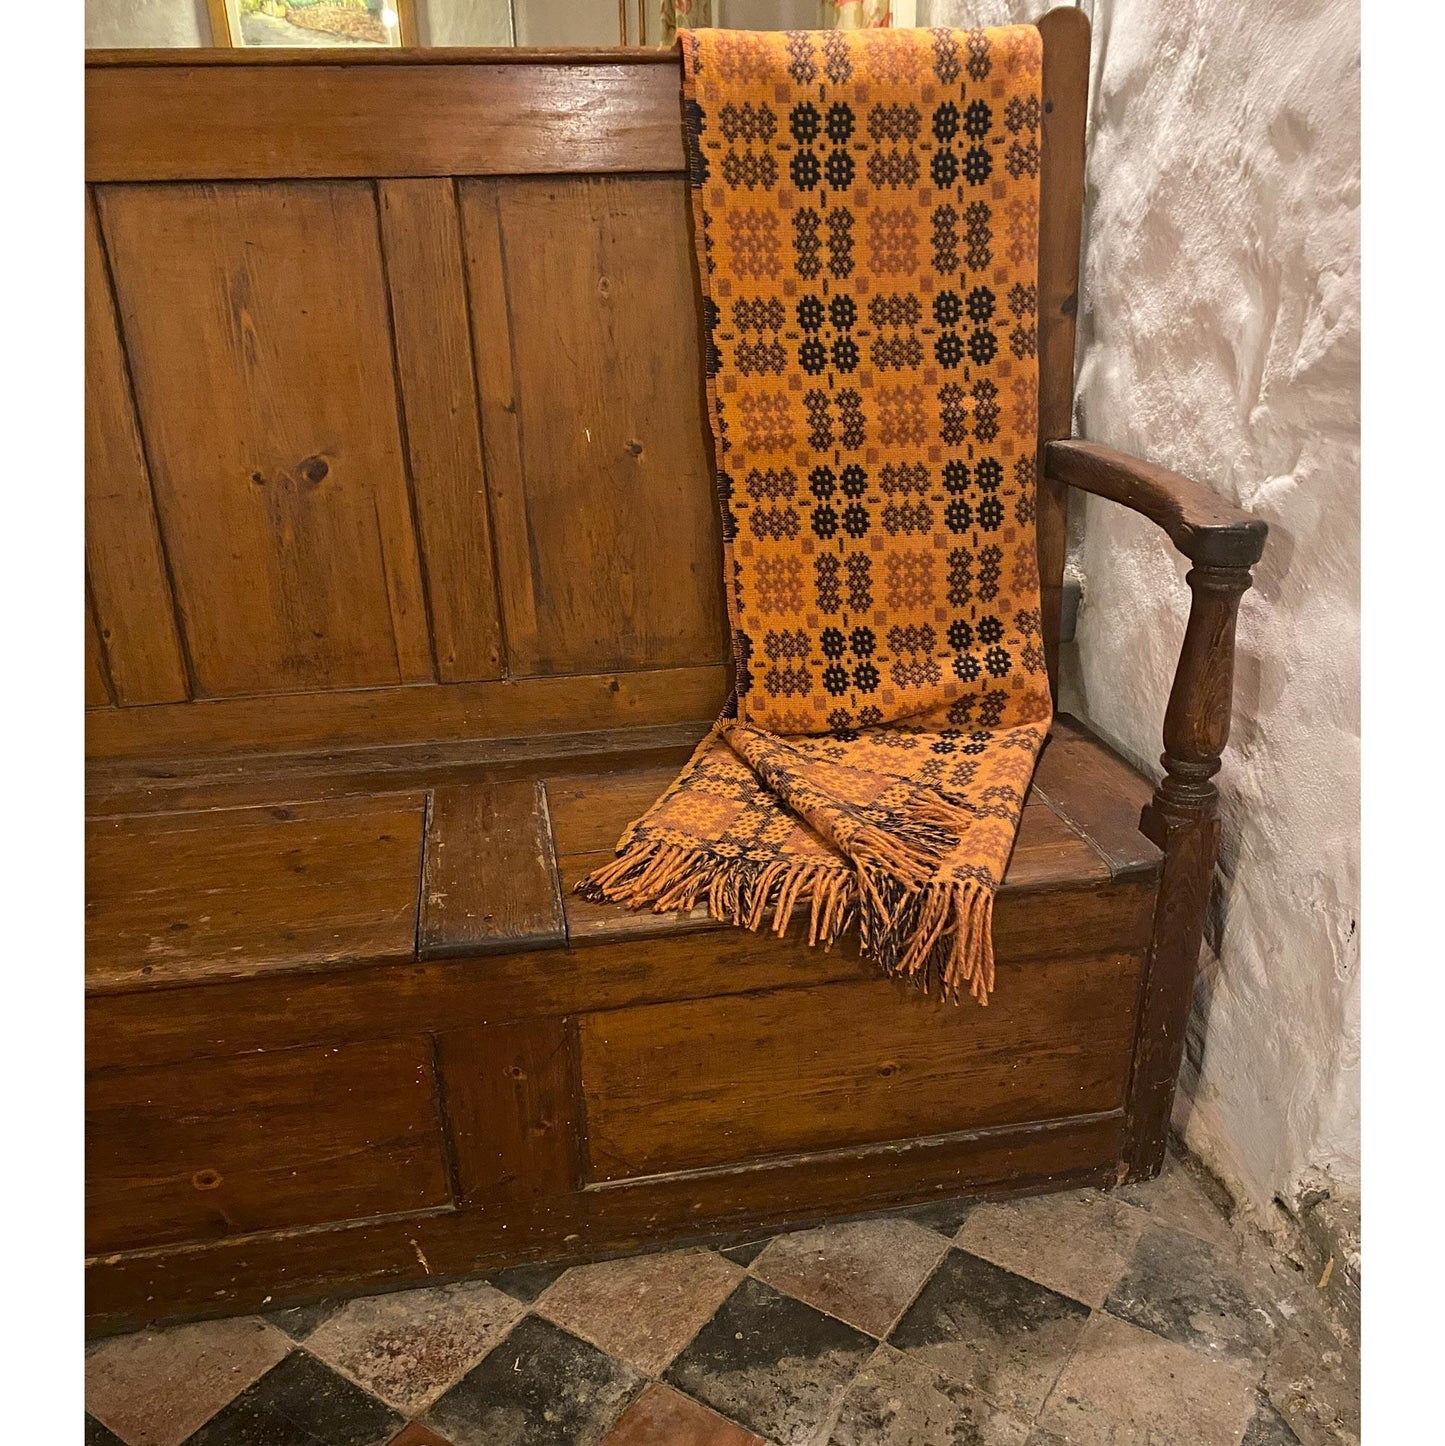 Throw / Blanket - Welsh Tapestry / Carthen Ysgafn - Caernarfon - 100% Wool - Pumpkin Spice